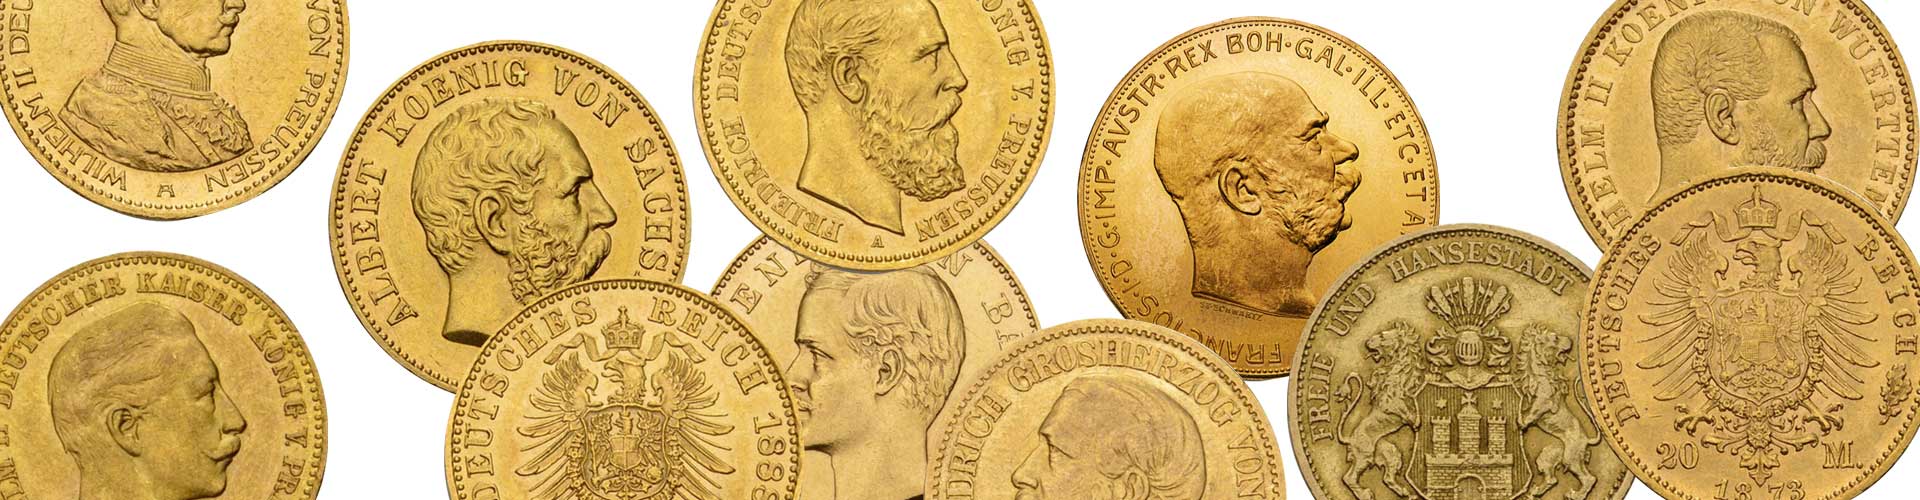 Sammlermünzen aus Gold wie Taler, Gulden oder Dukaten